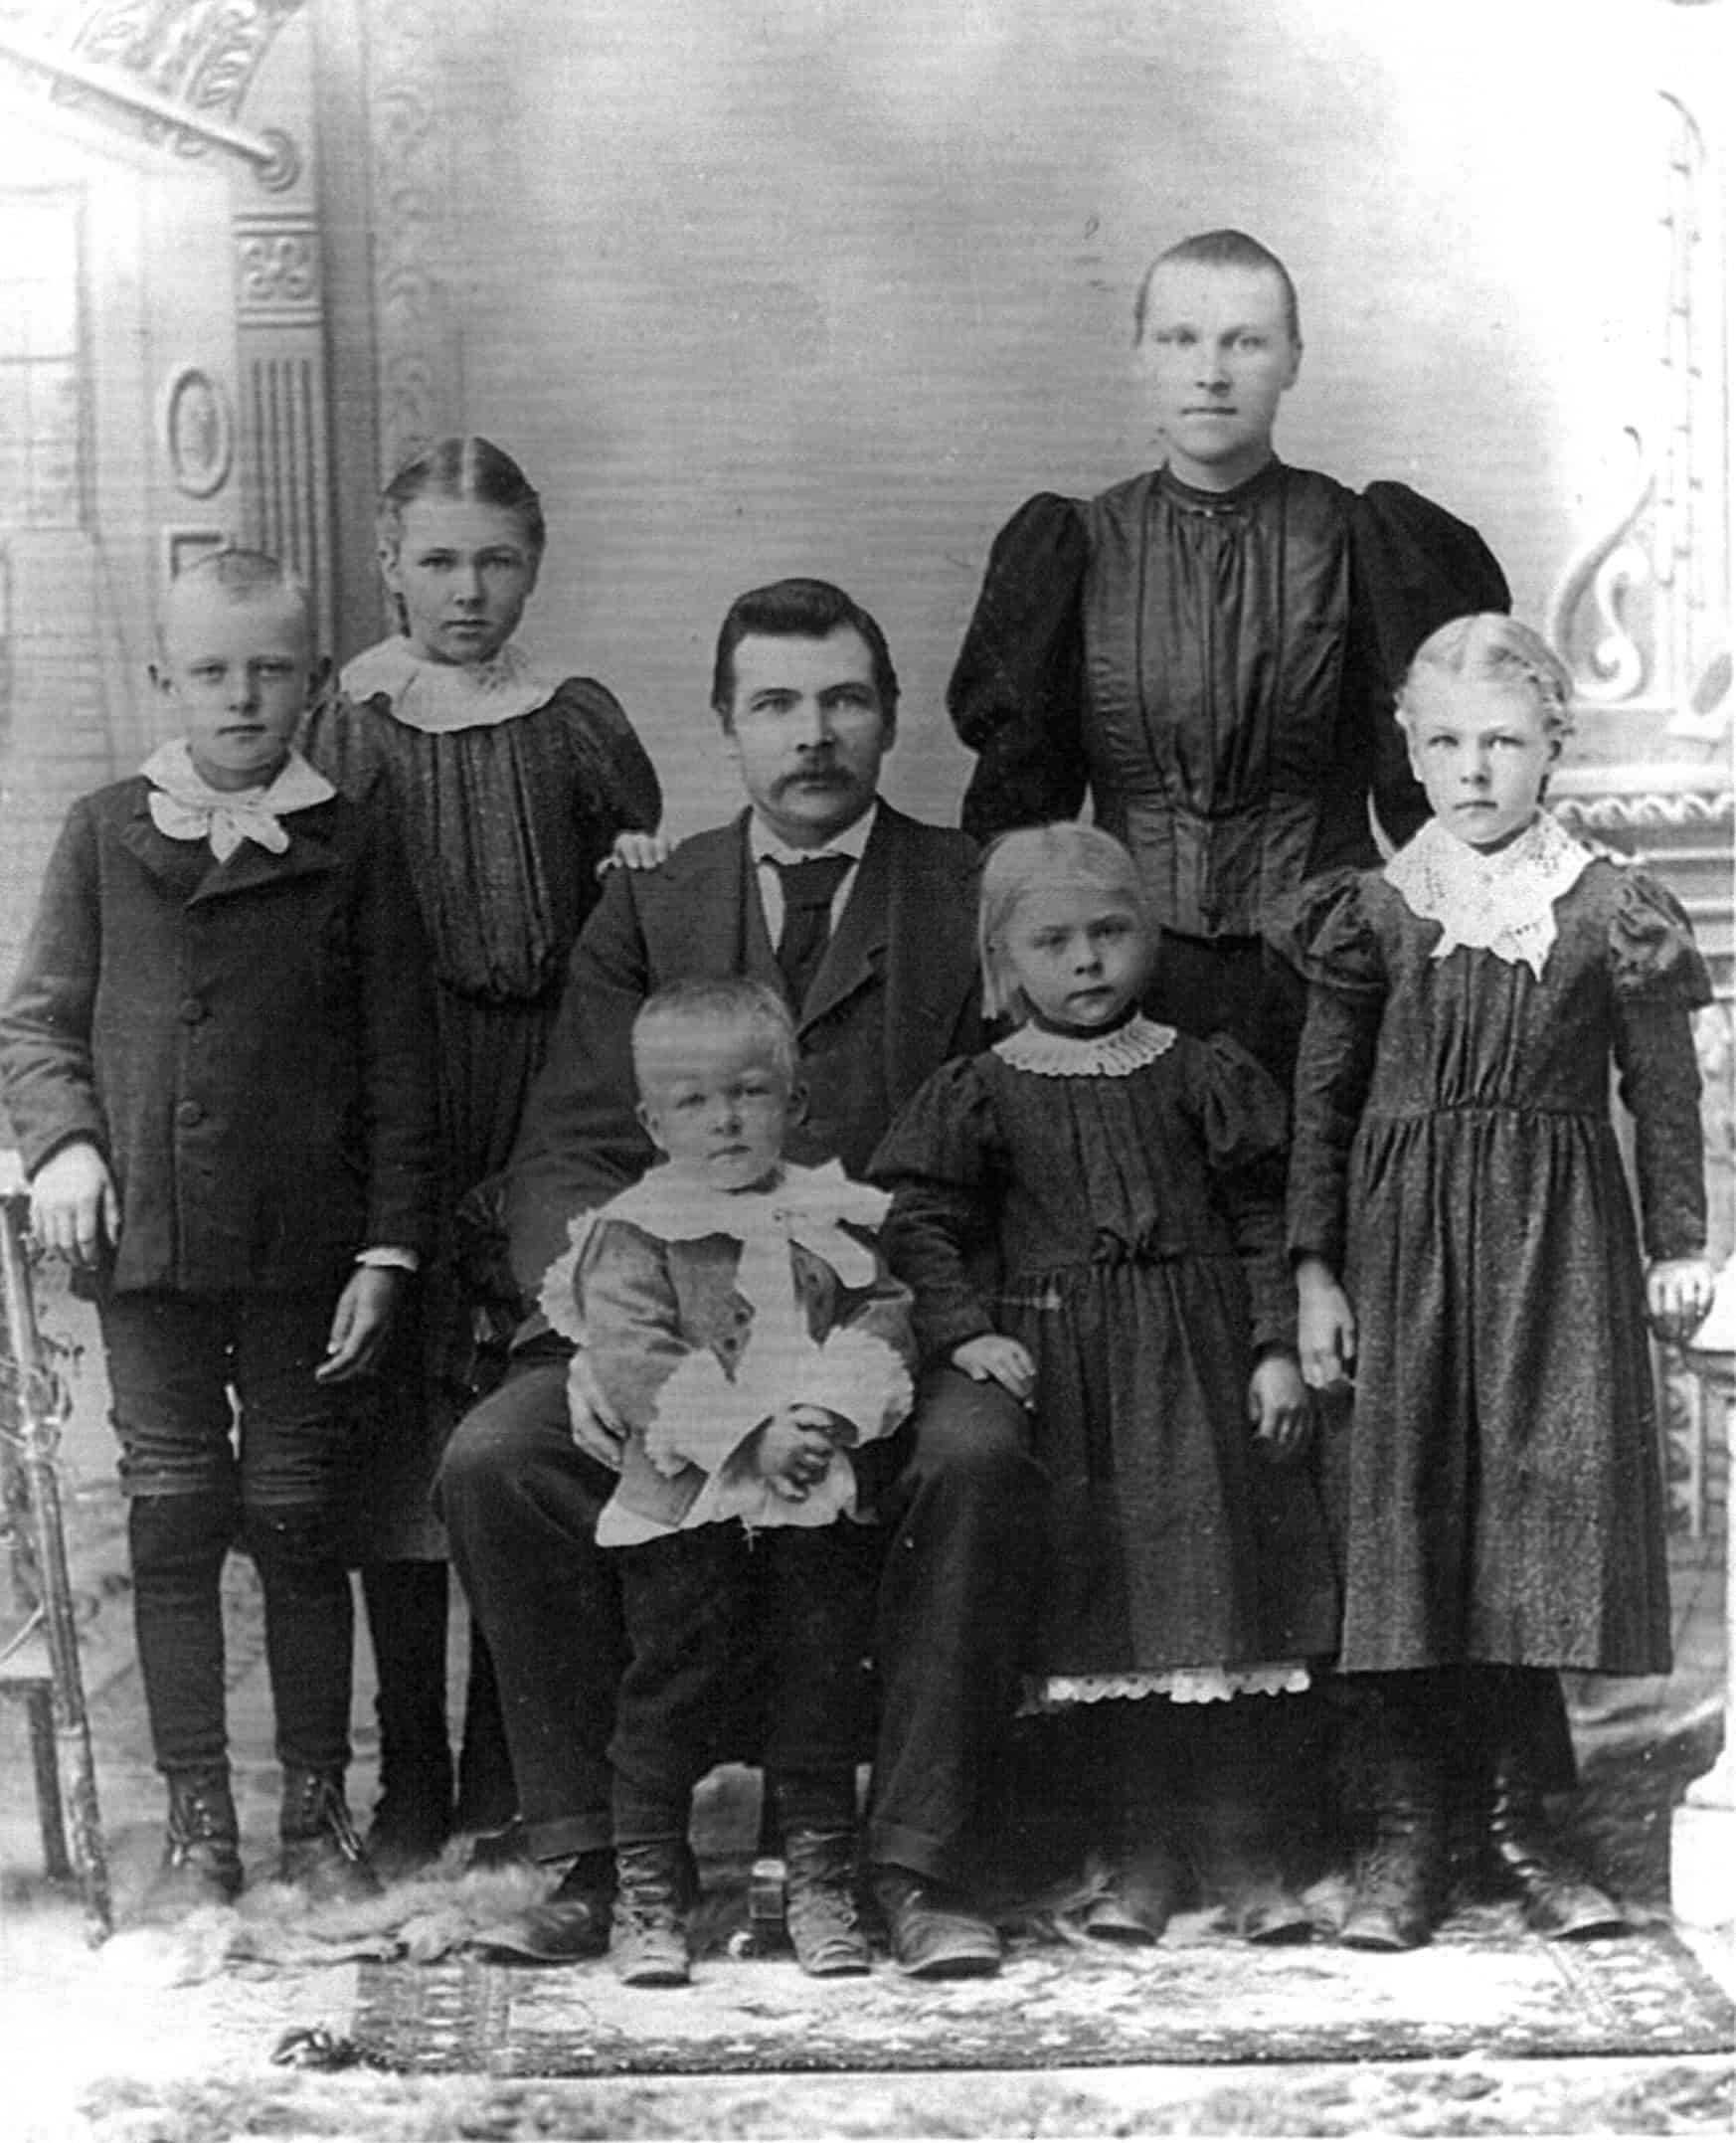 Family in Astoria, Oregon Portrait